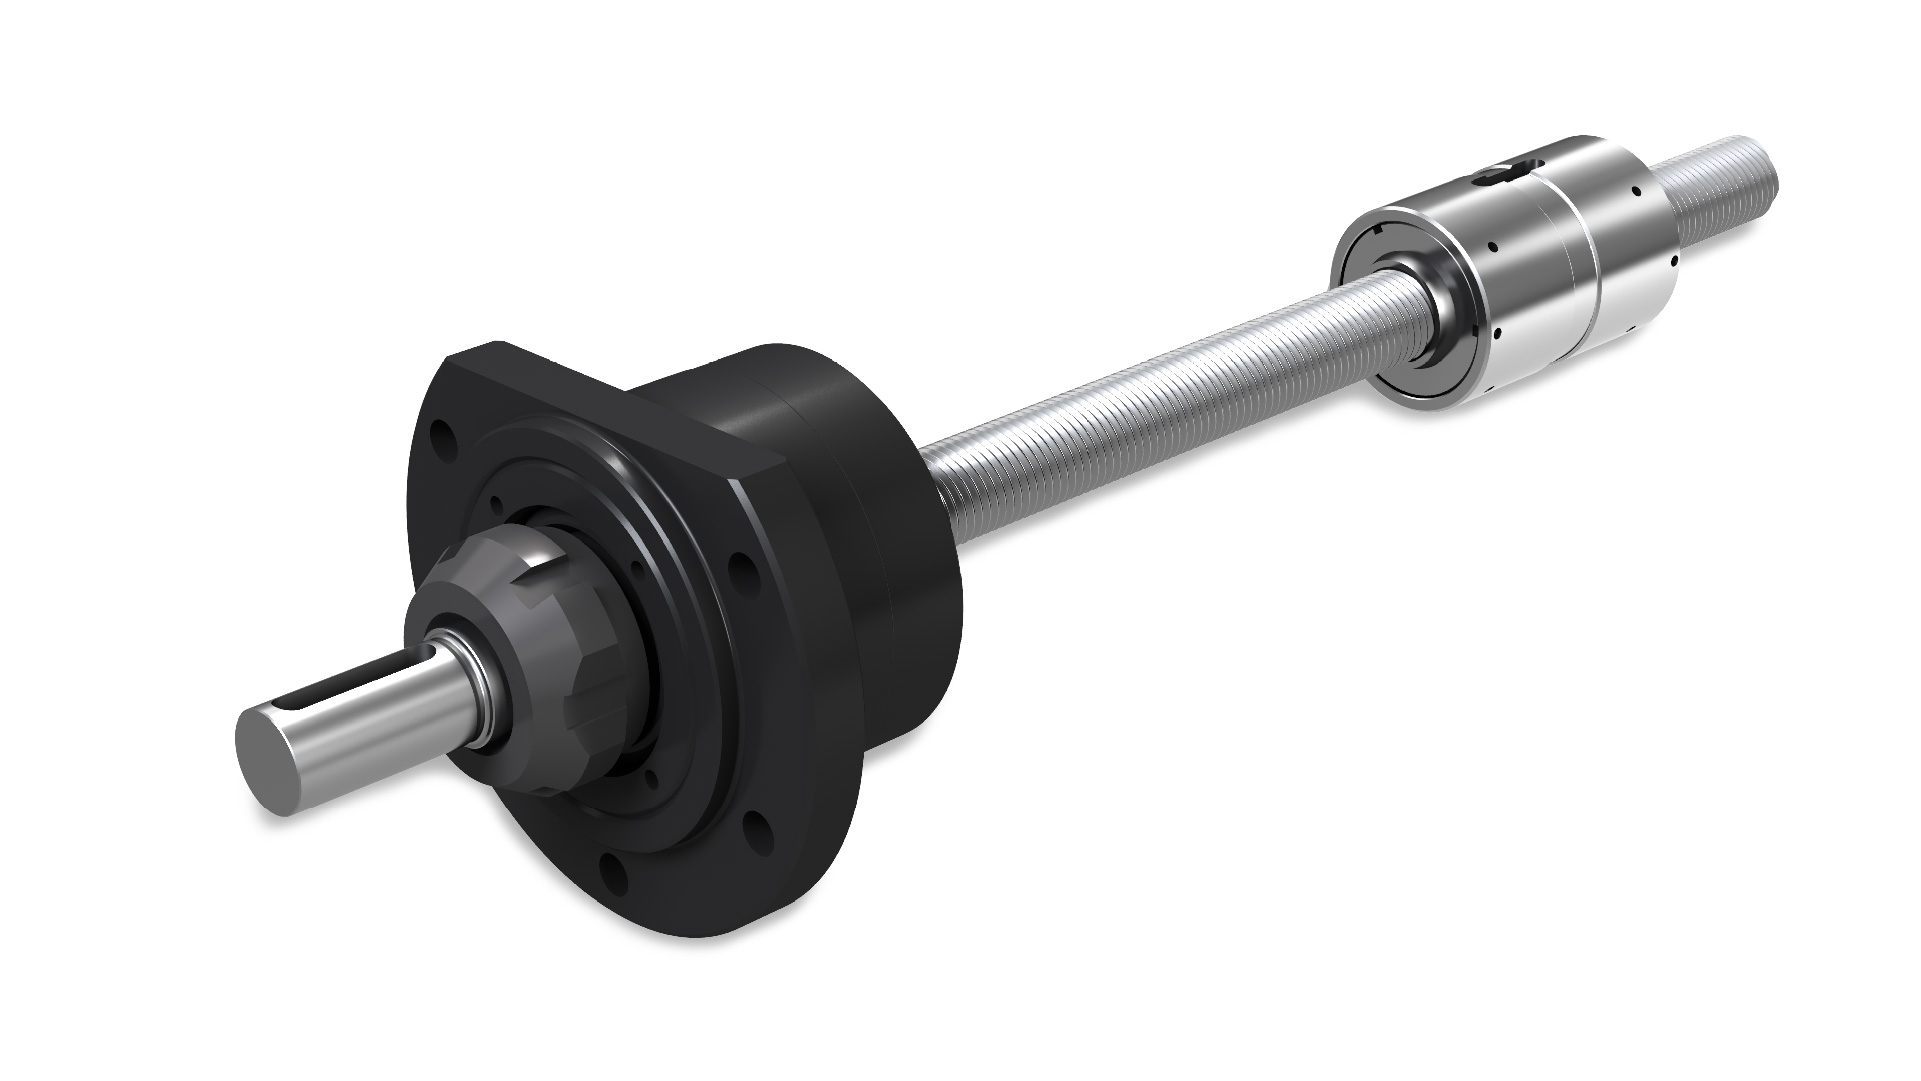 Support bearings for roller screws